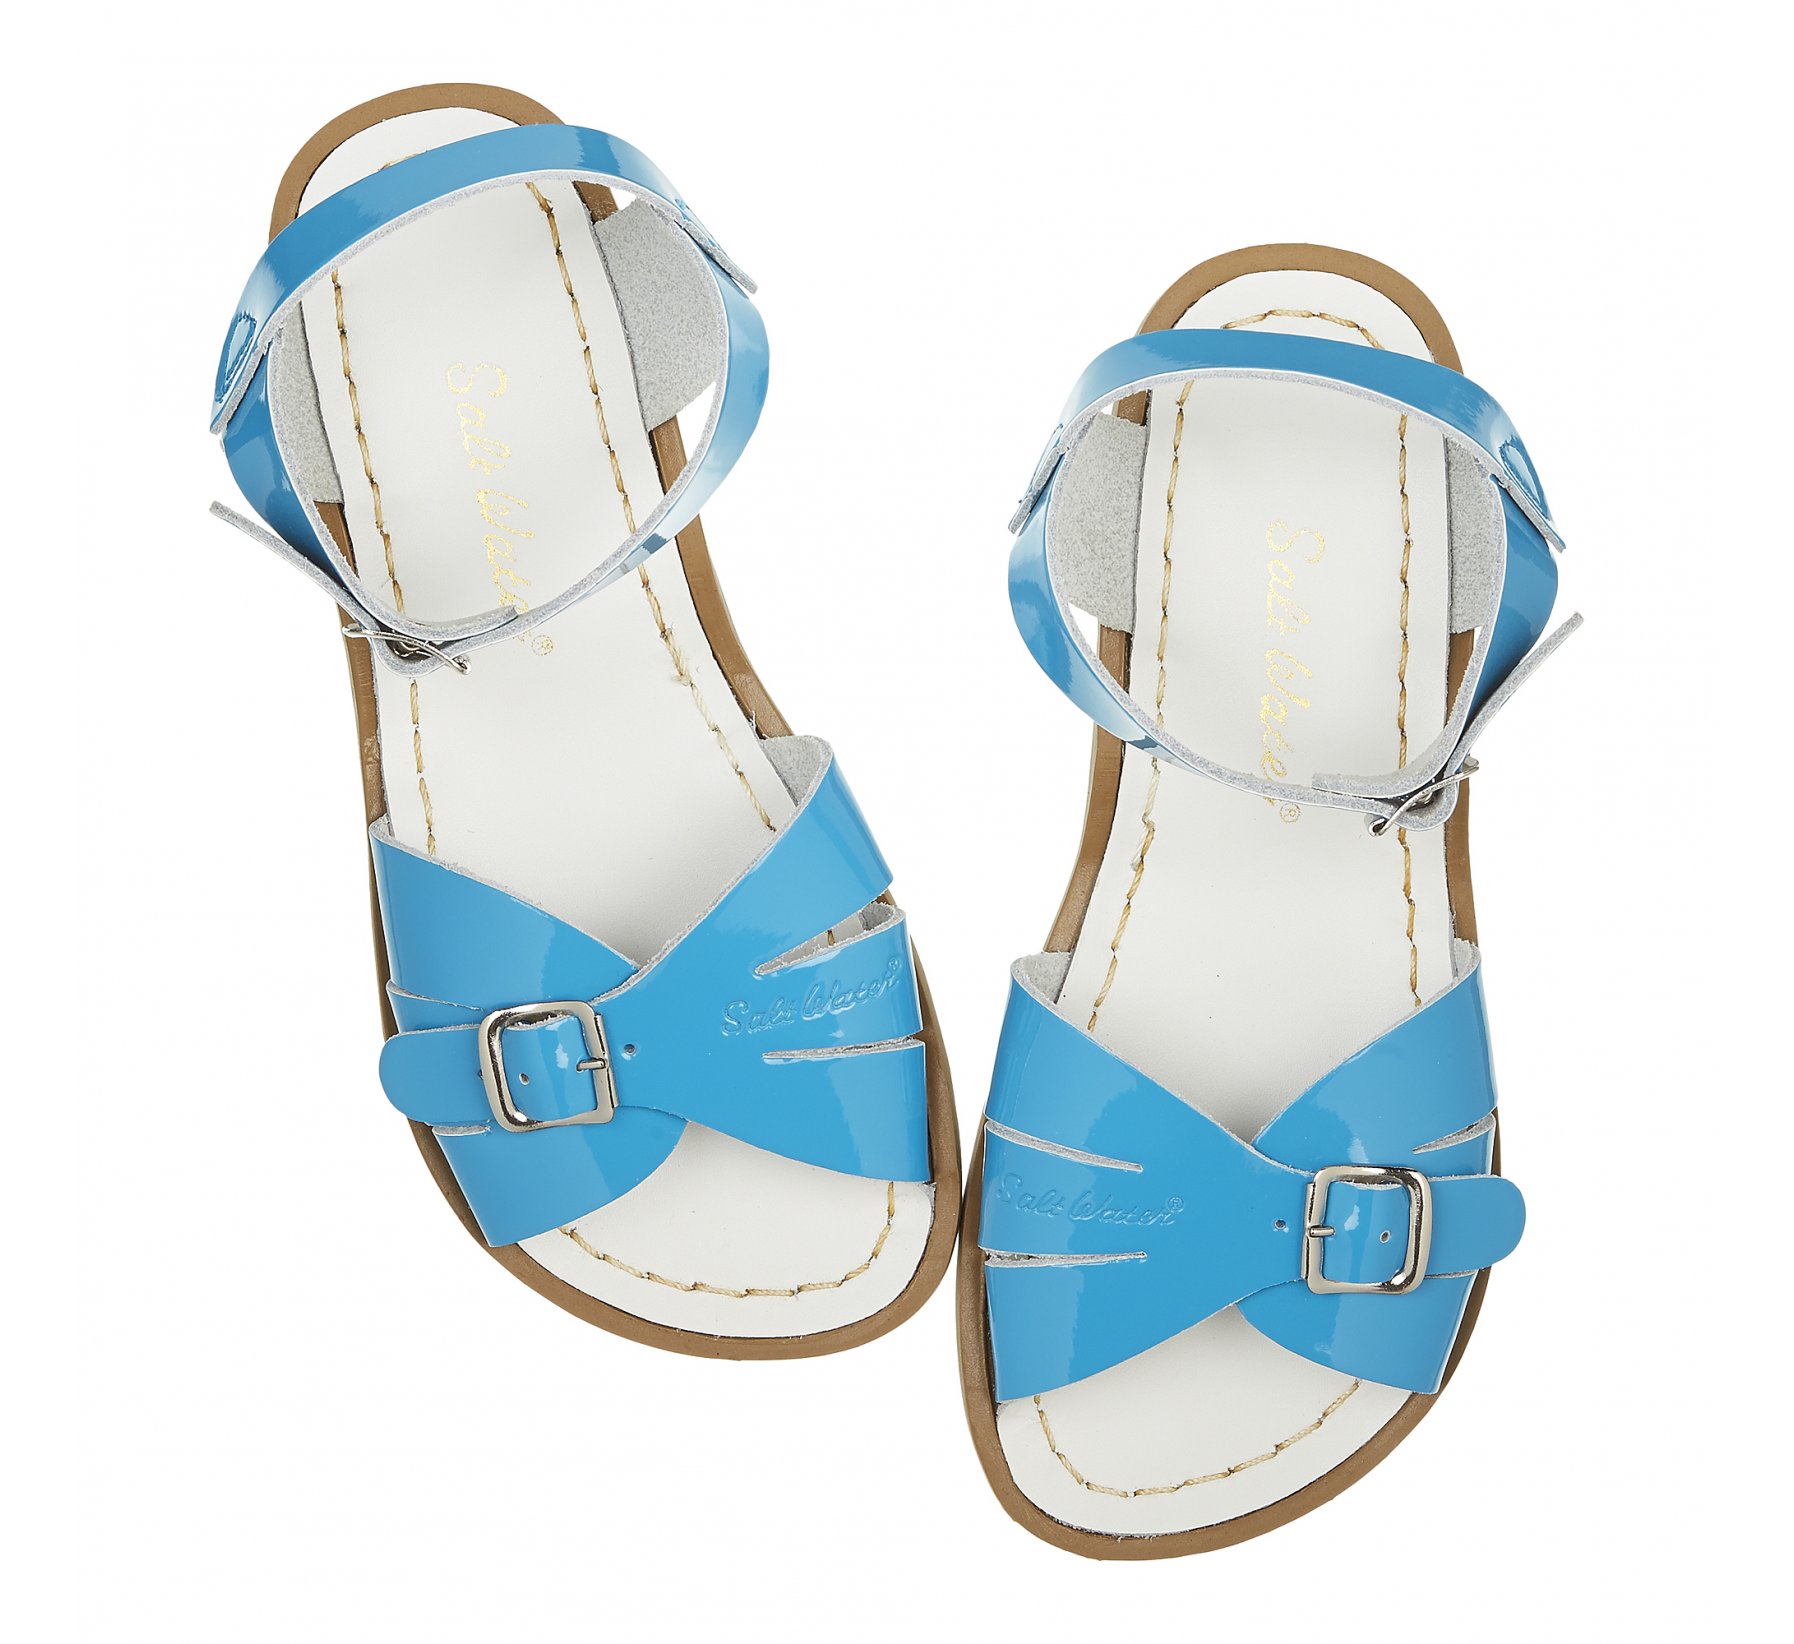 Classic Shiny Turquoise Kids Sandals - Salt Water Sandals